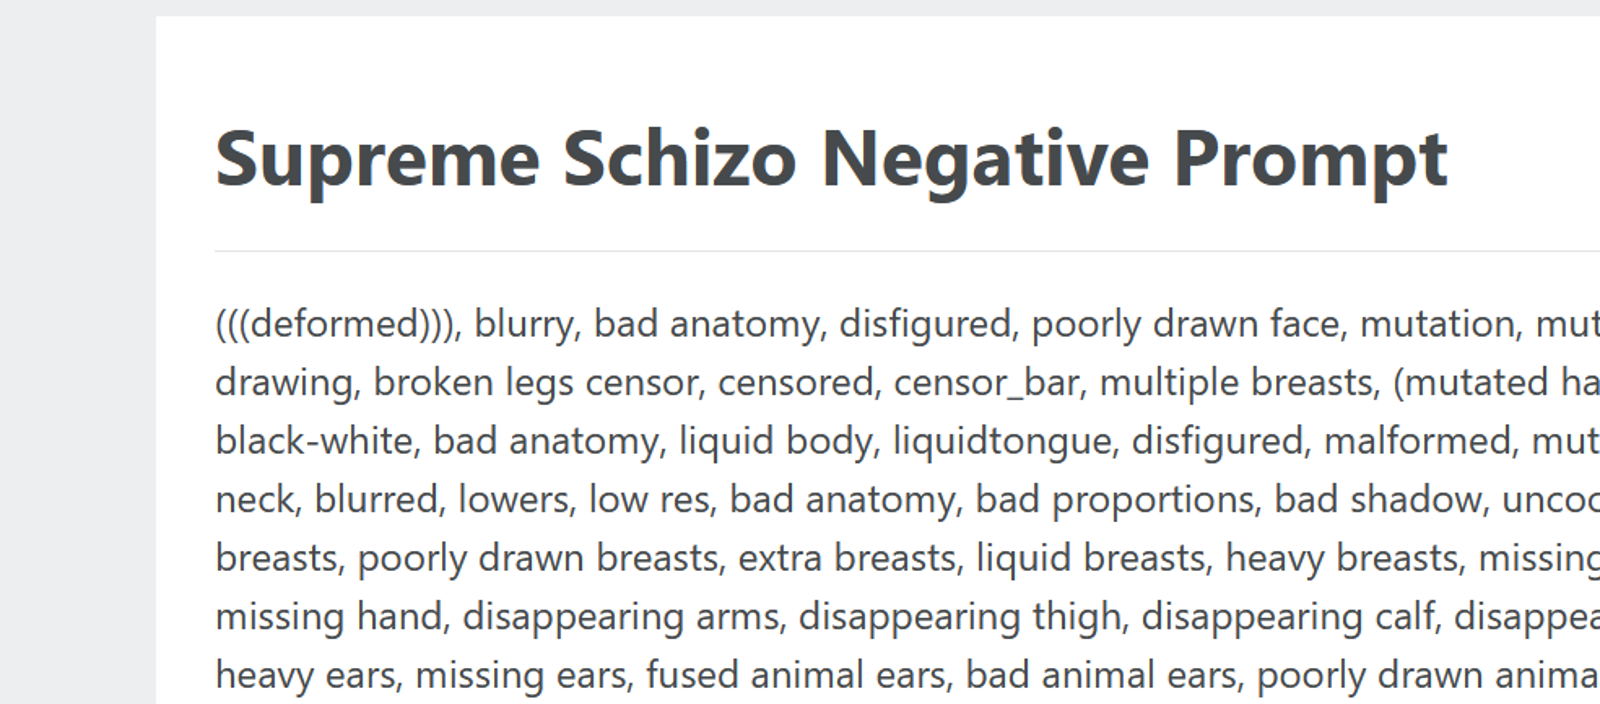 Supreme Schizo: Low-effort negative prompting